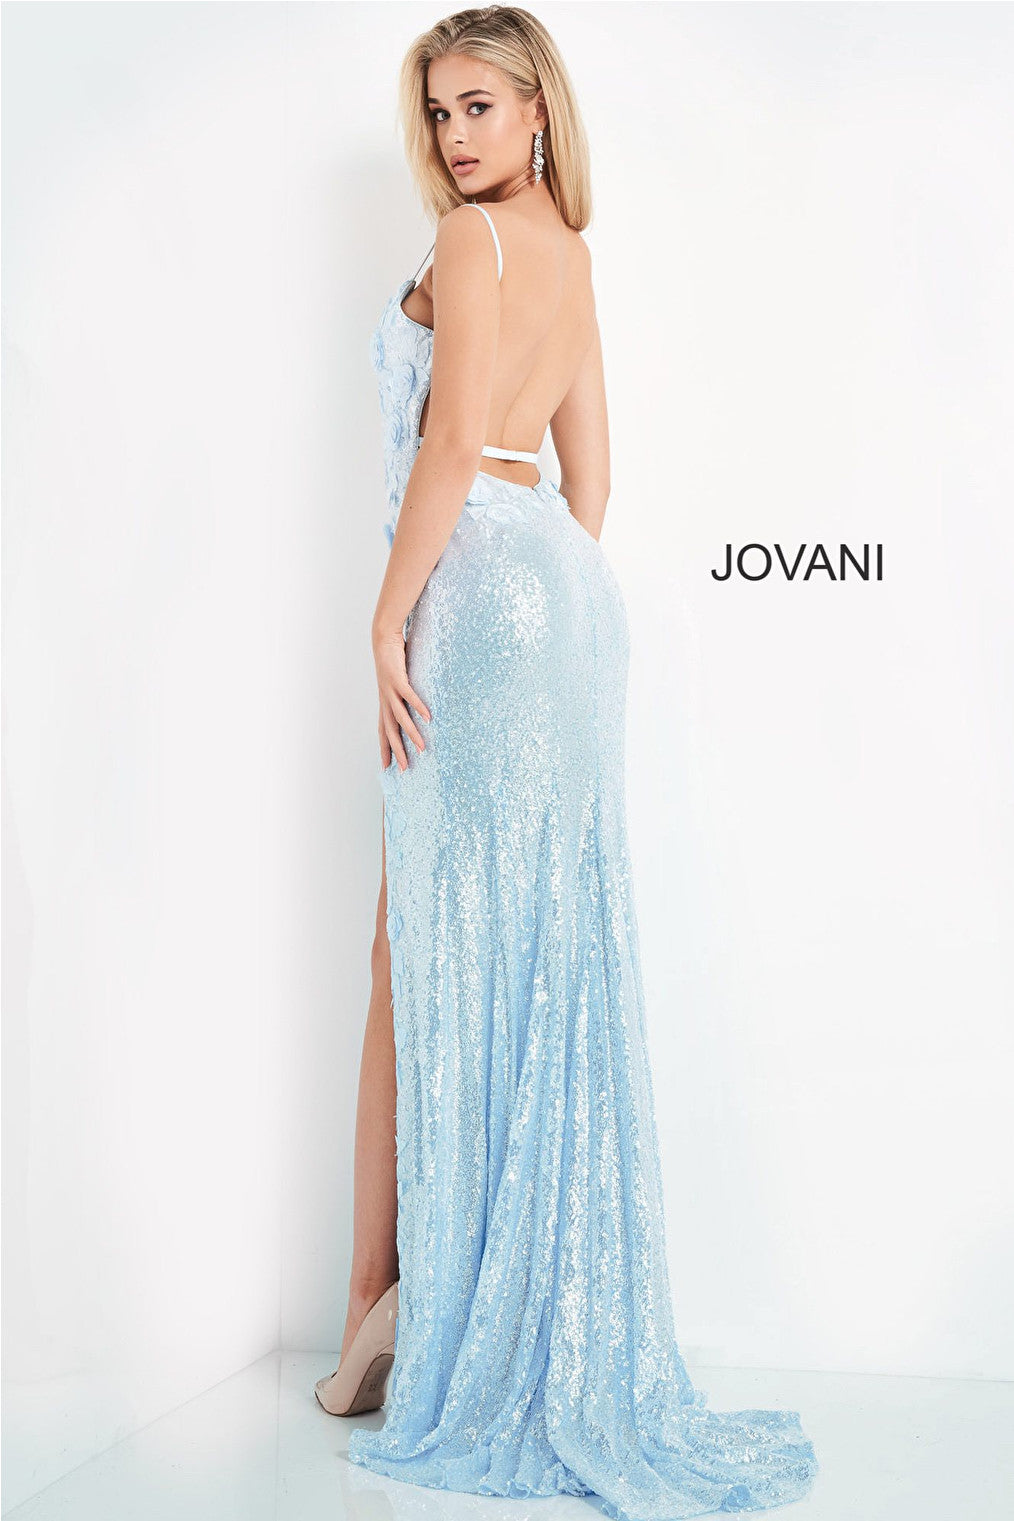 Jovani 1012 sexy high slit dress